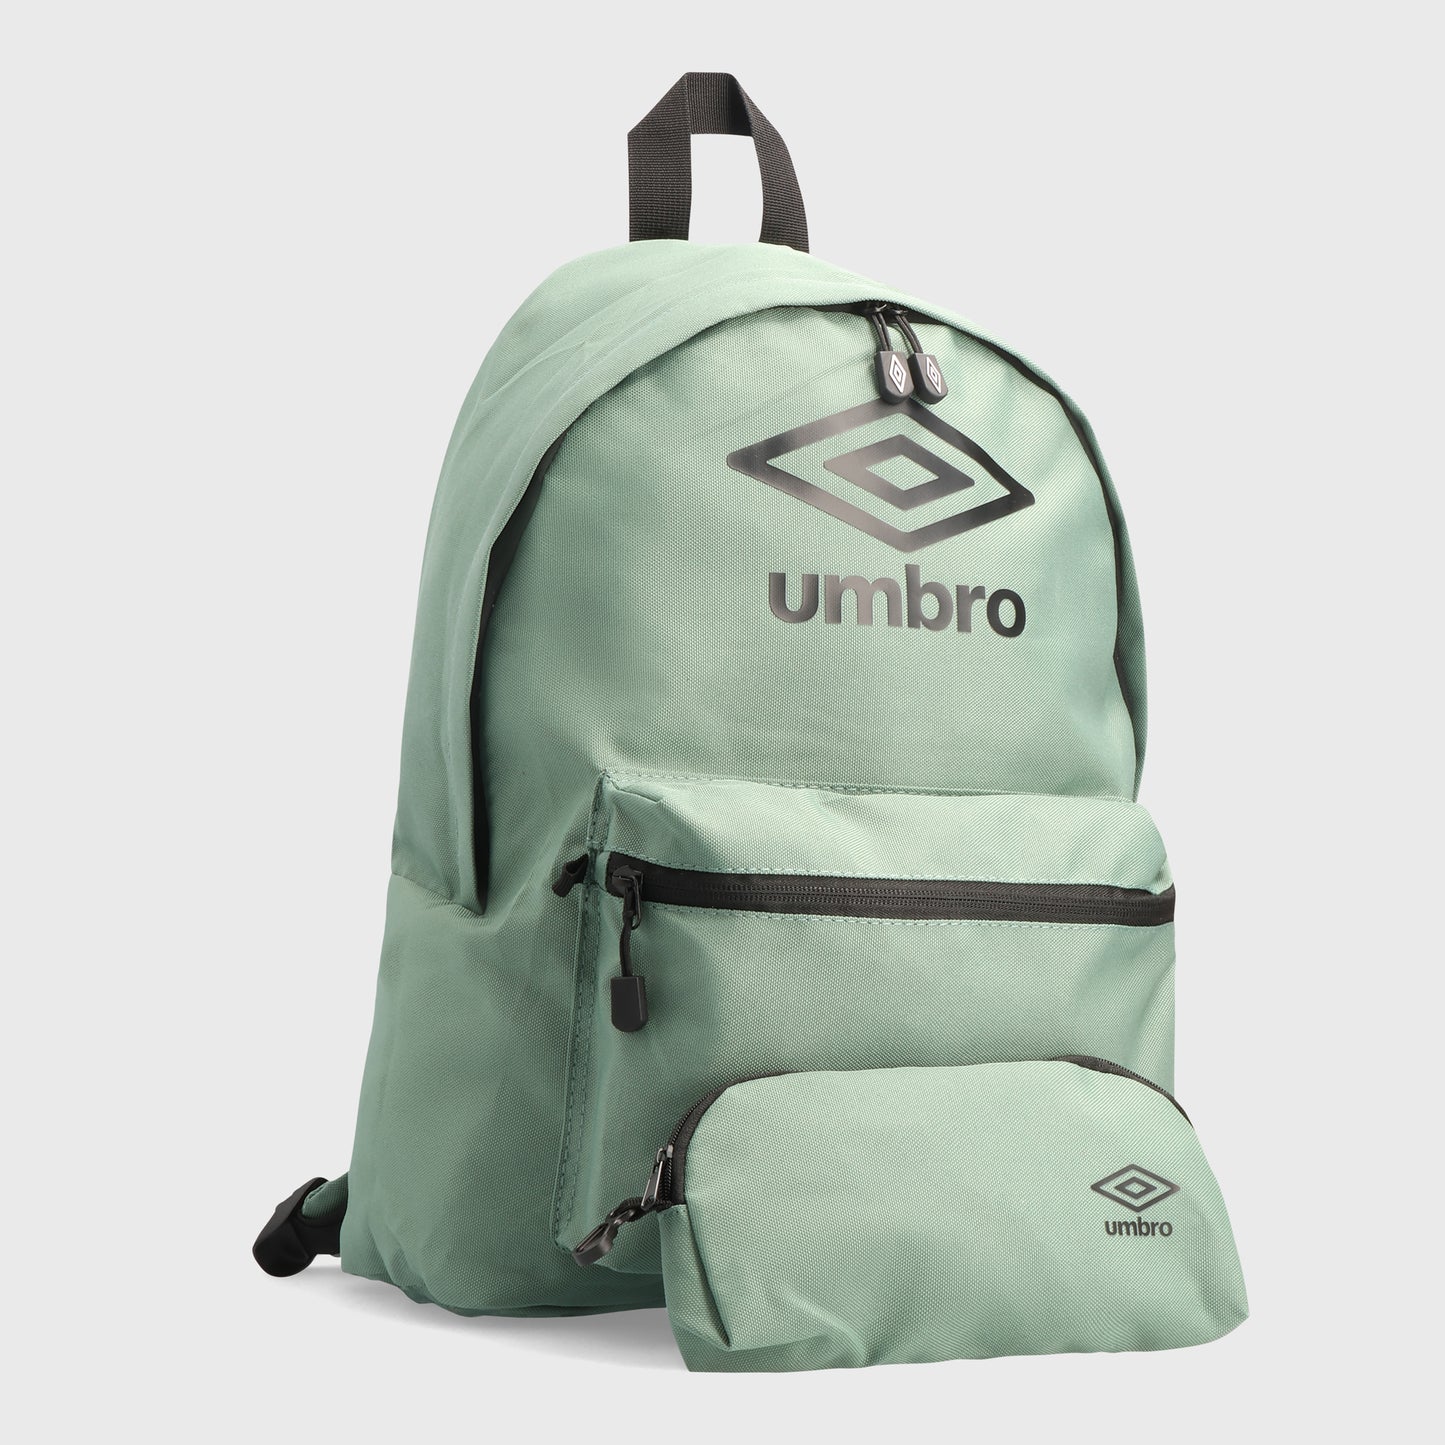 Umbro Back To School Backpack Set Green/Black _ 181151 _ Green